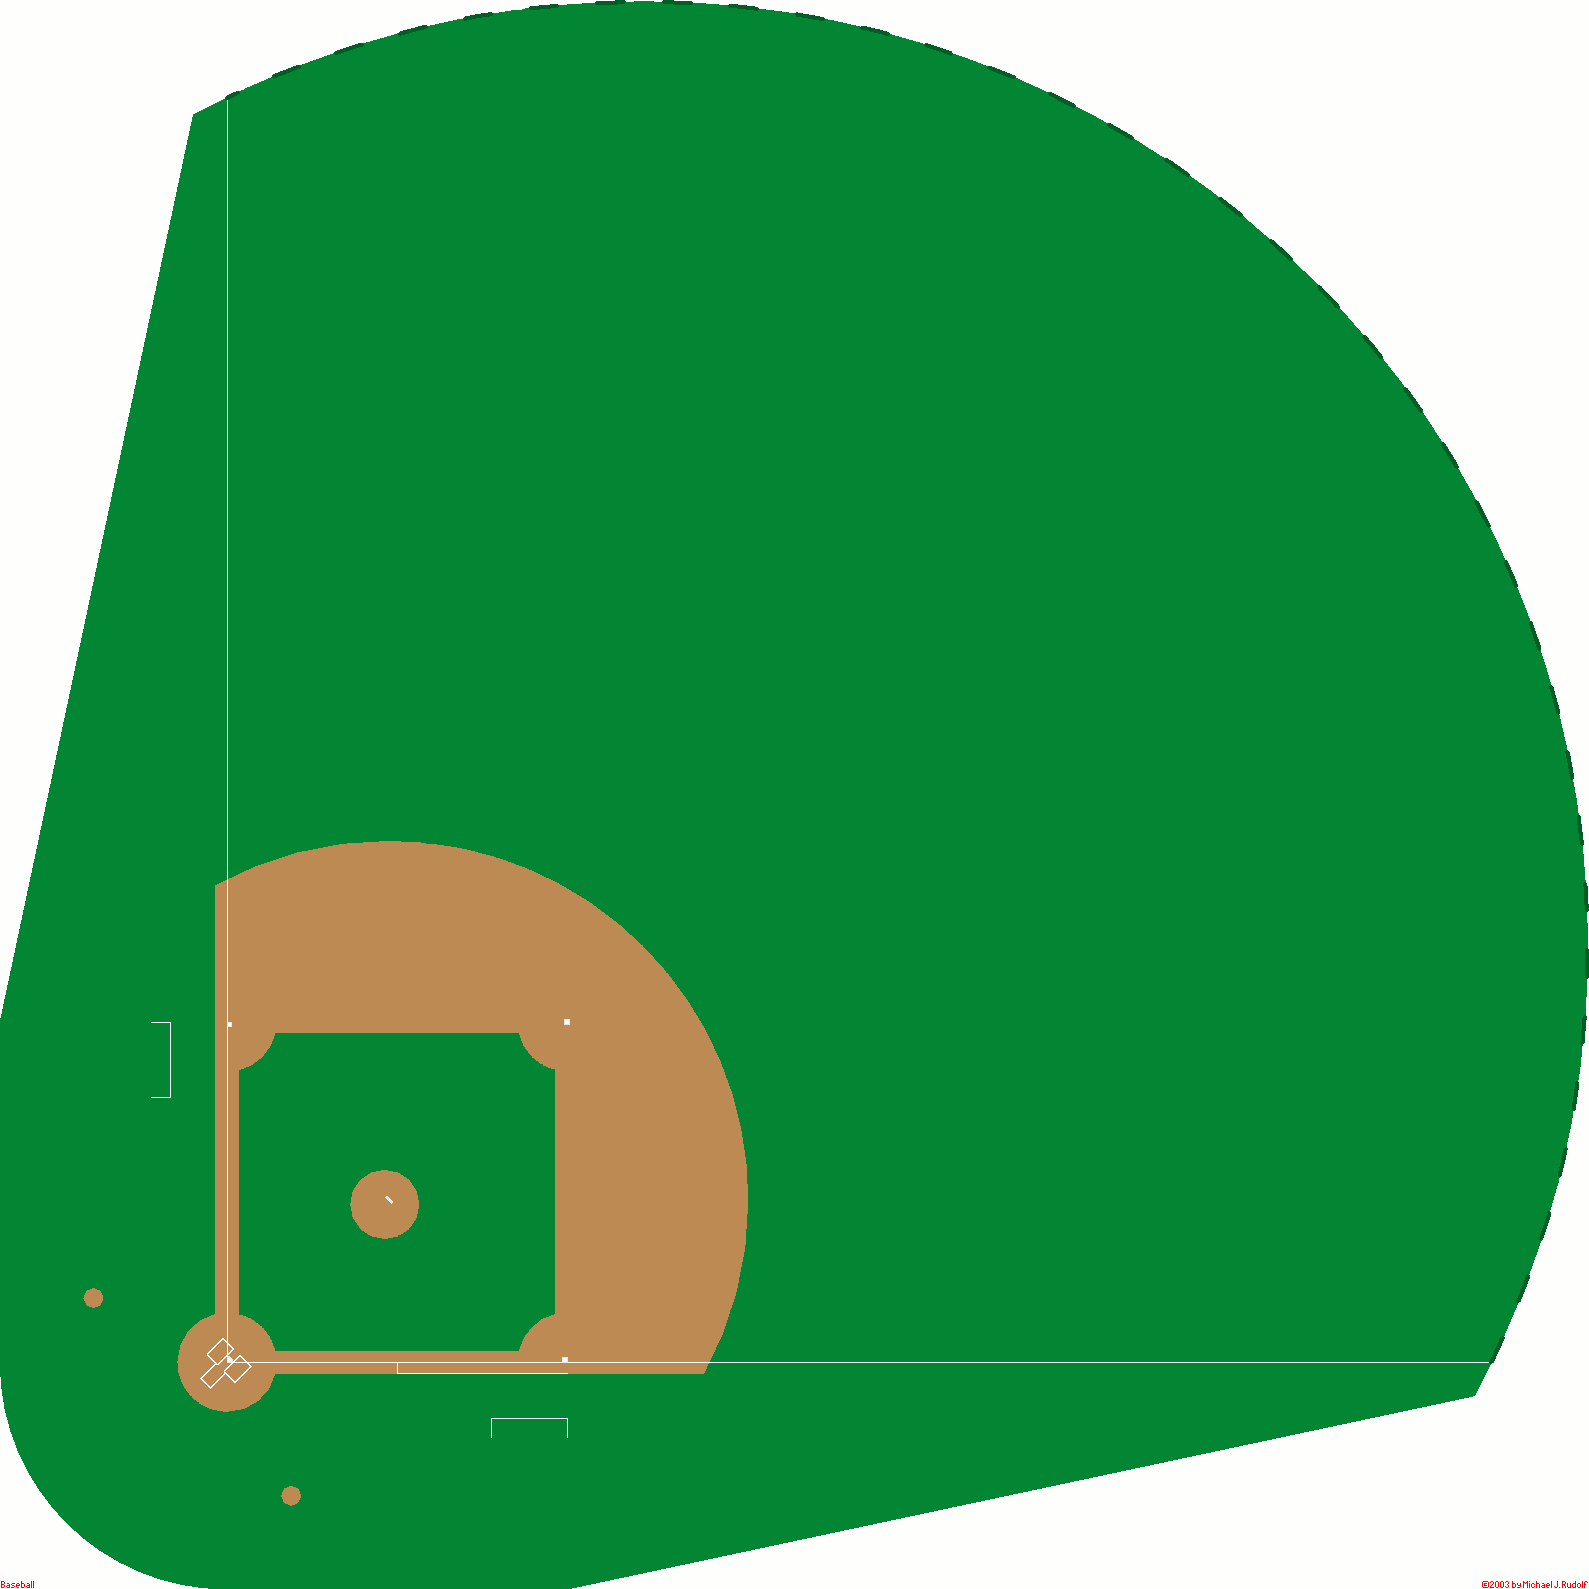 Baseball Field Diagram Free Blank Baseball Field Diagram Download Free Clip Art Free Clip